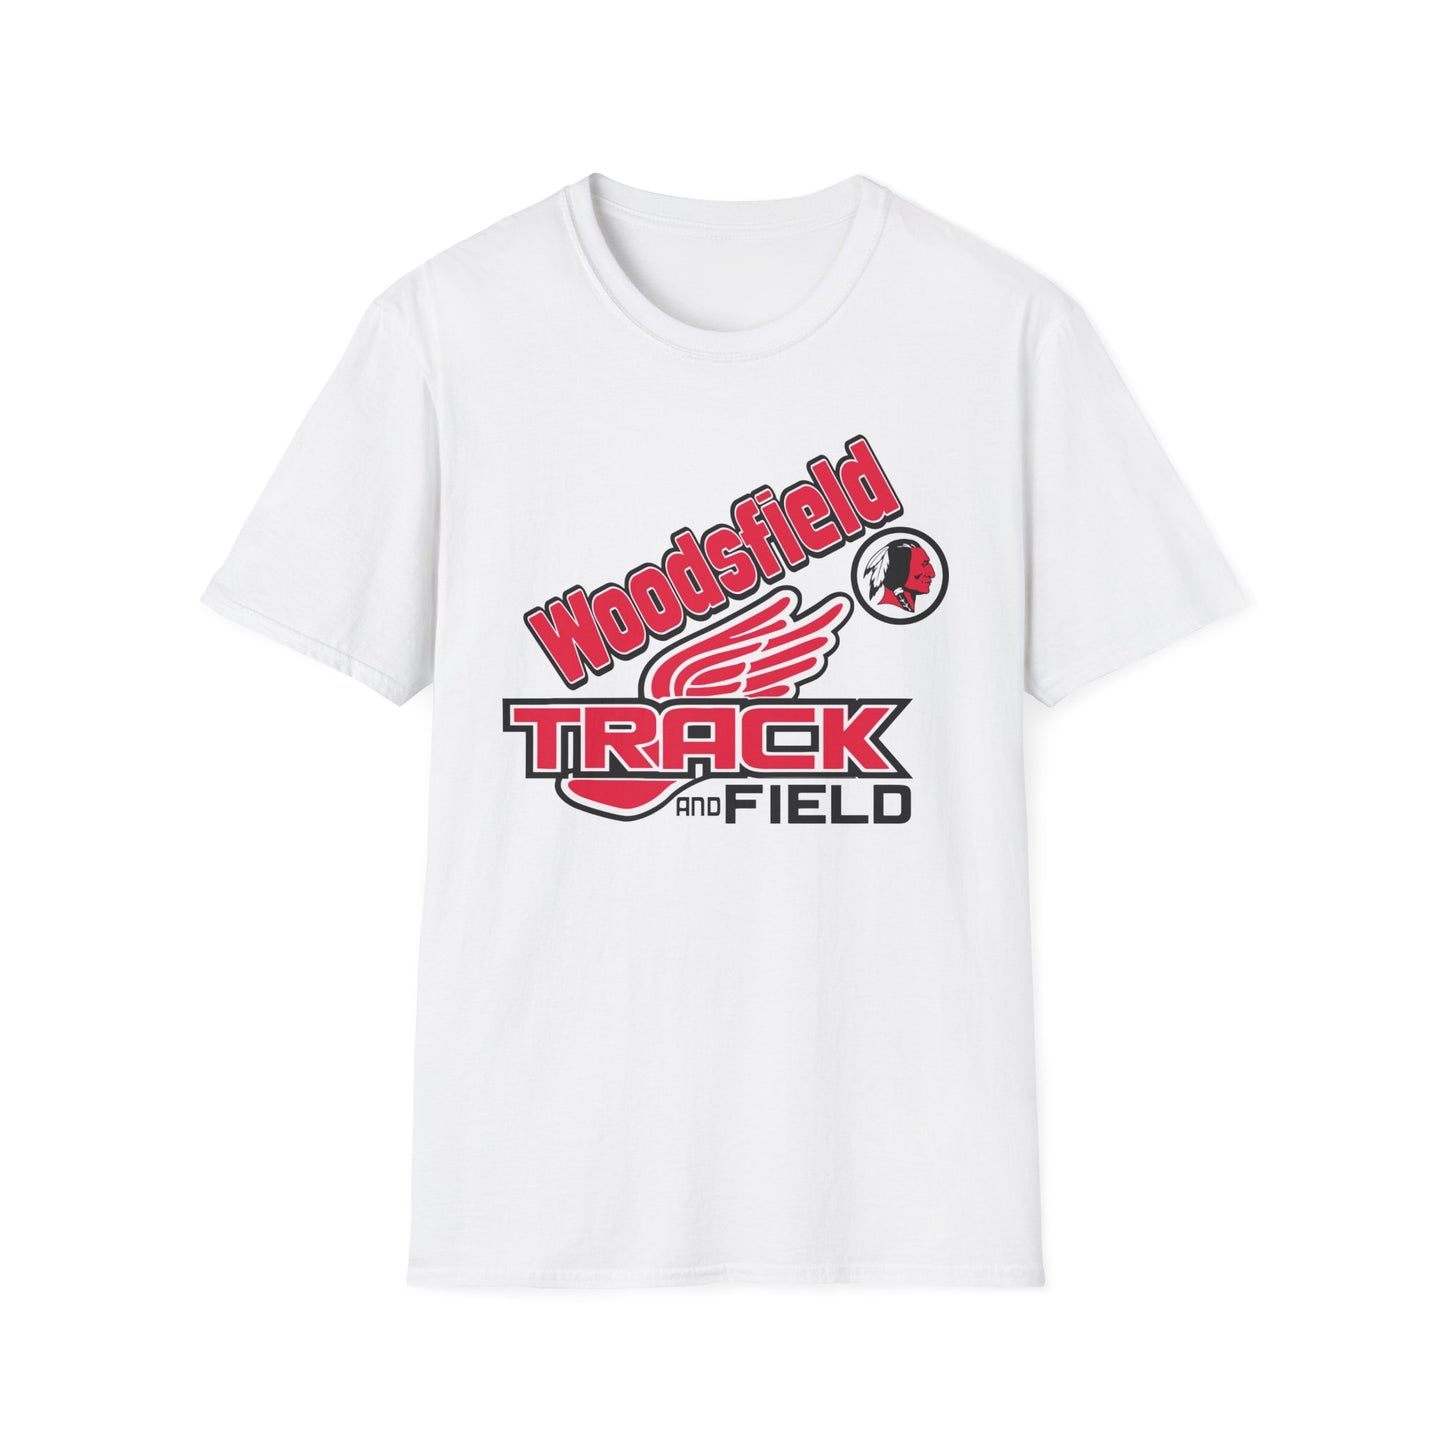 Unisex Softstyle T-Shirt - Wdsf Track 2